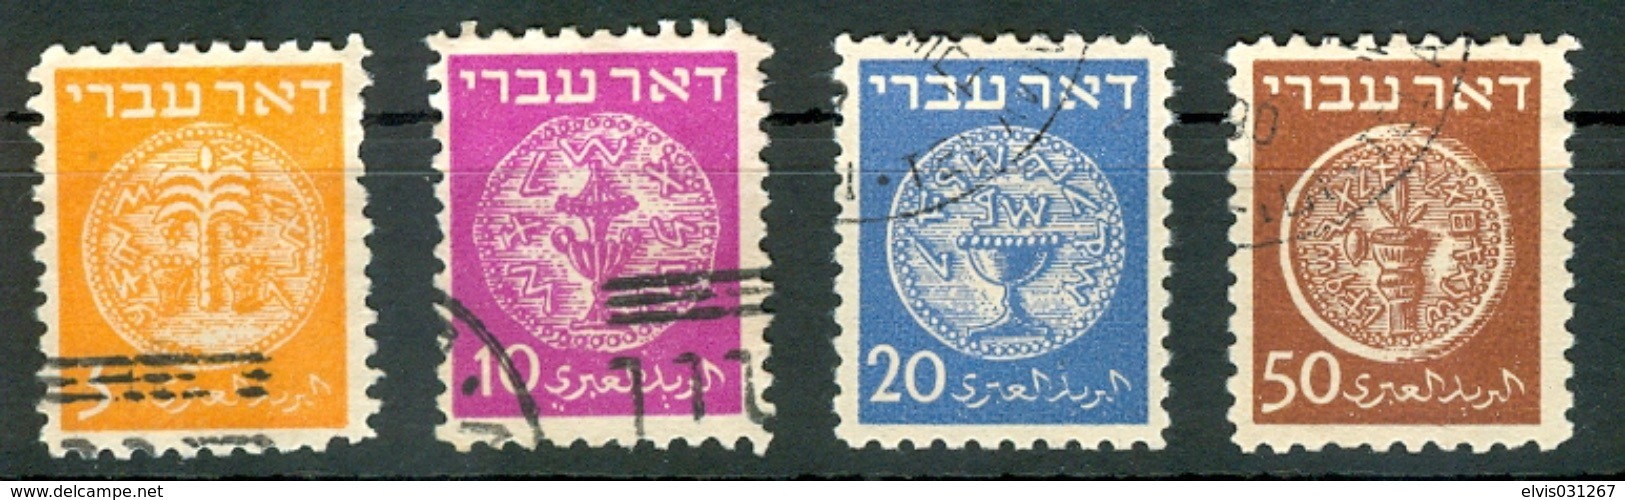 Israel - 1948, Michel/Philex No. : 1-4, Perf: 10/11 !!! - DOAR IVRI - 1st Coins - USED - *** - No Tab - Nuevos (sin Tab)